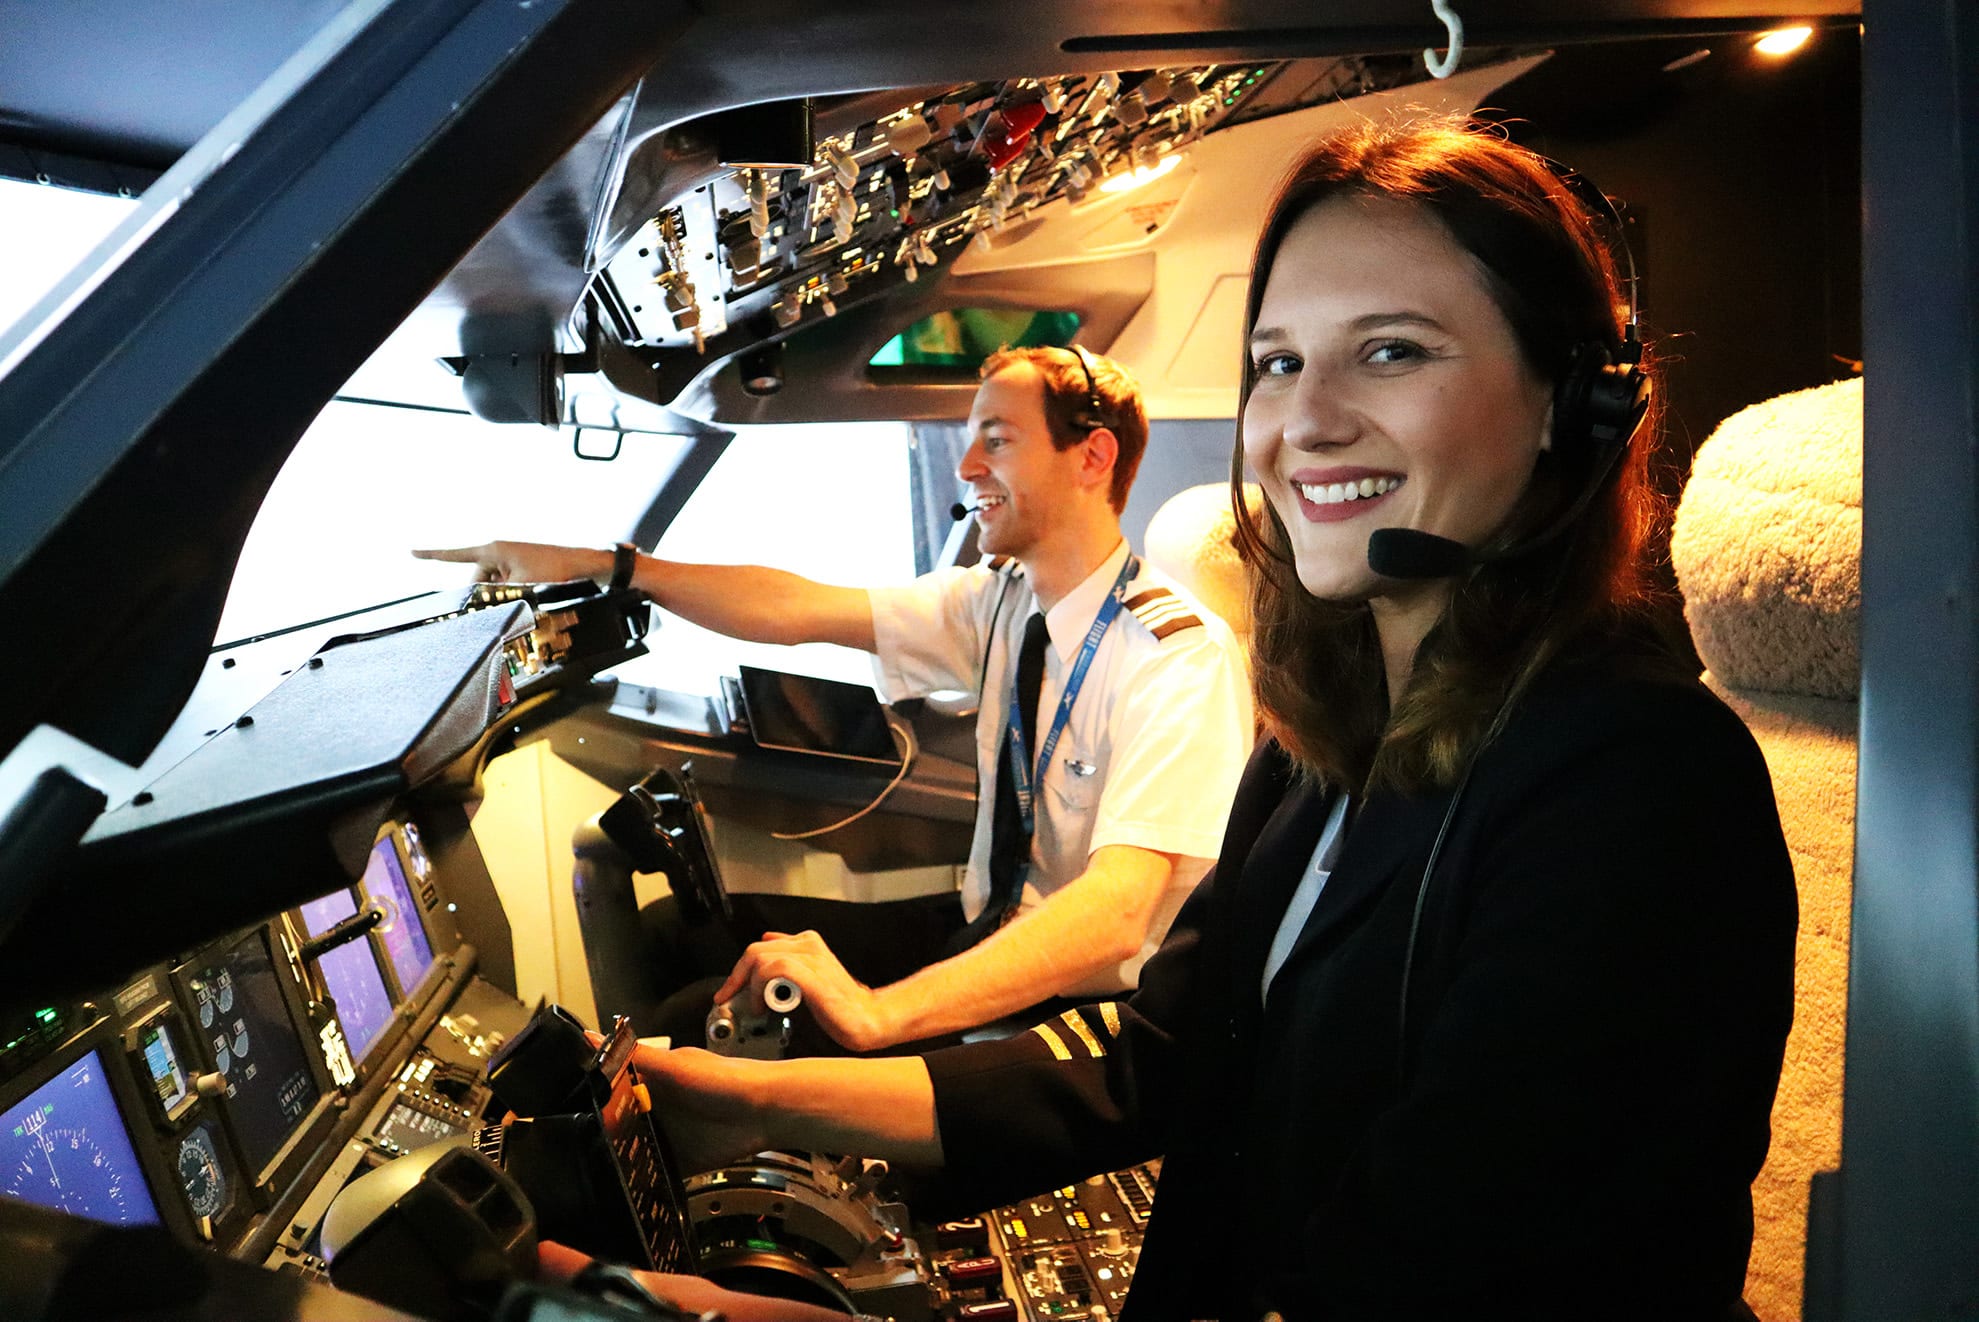 Boeing 737 Flight Simulator, 45 Minutes - Parafield Airport, Adelaide